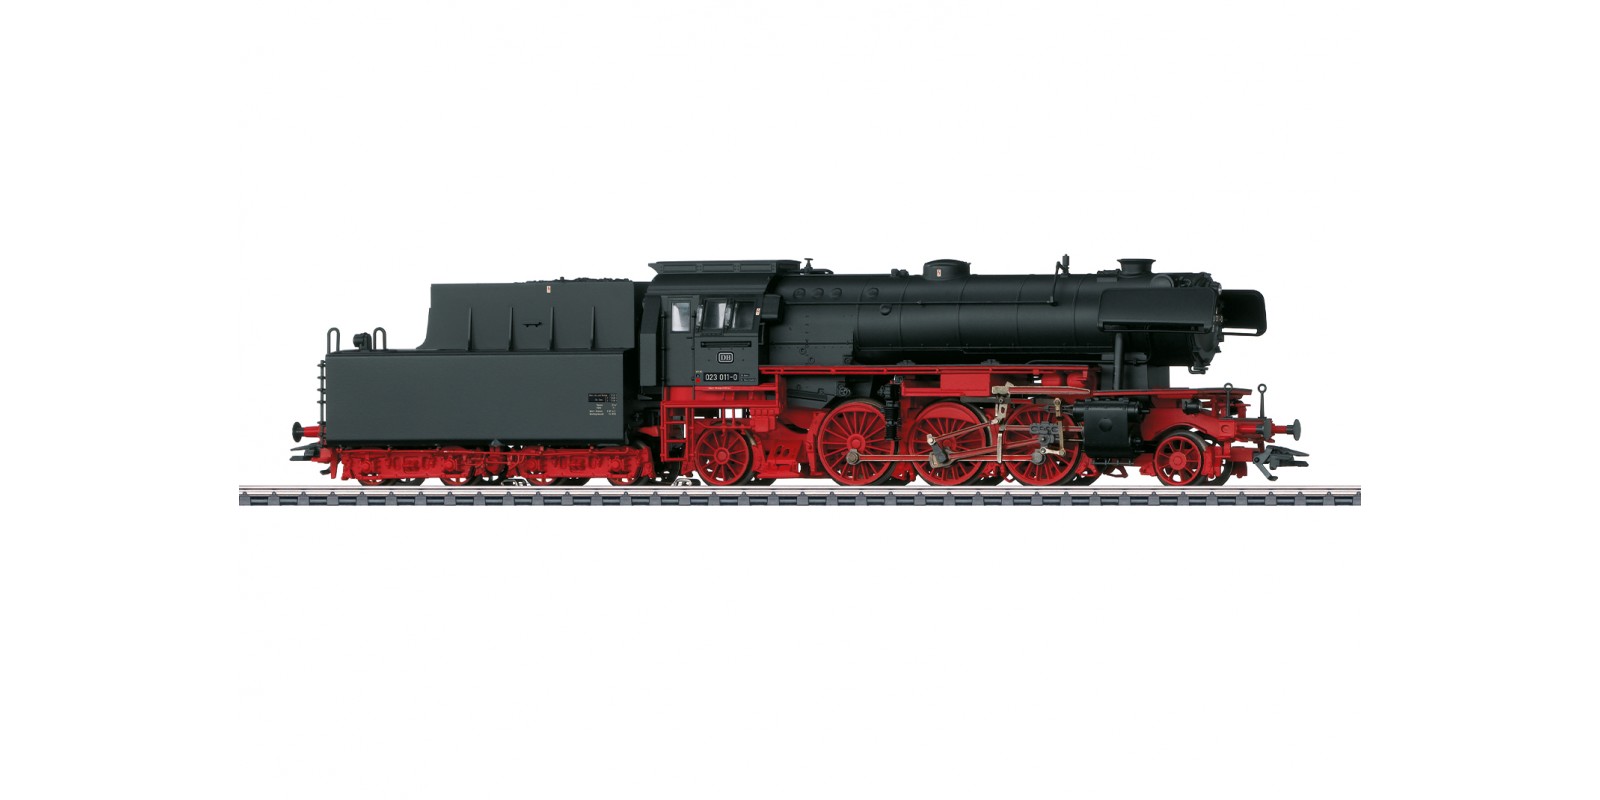 39231 Class 023 Passenger Steam Locomotive